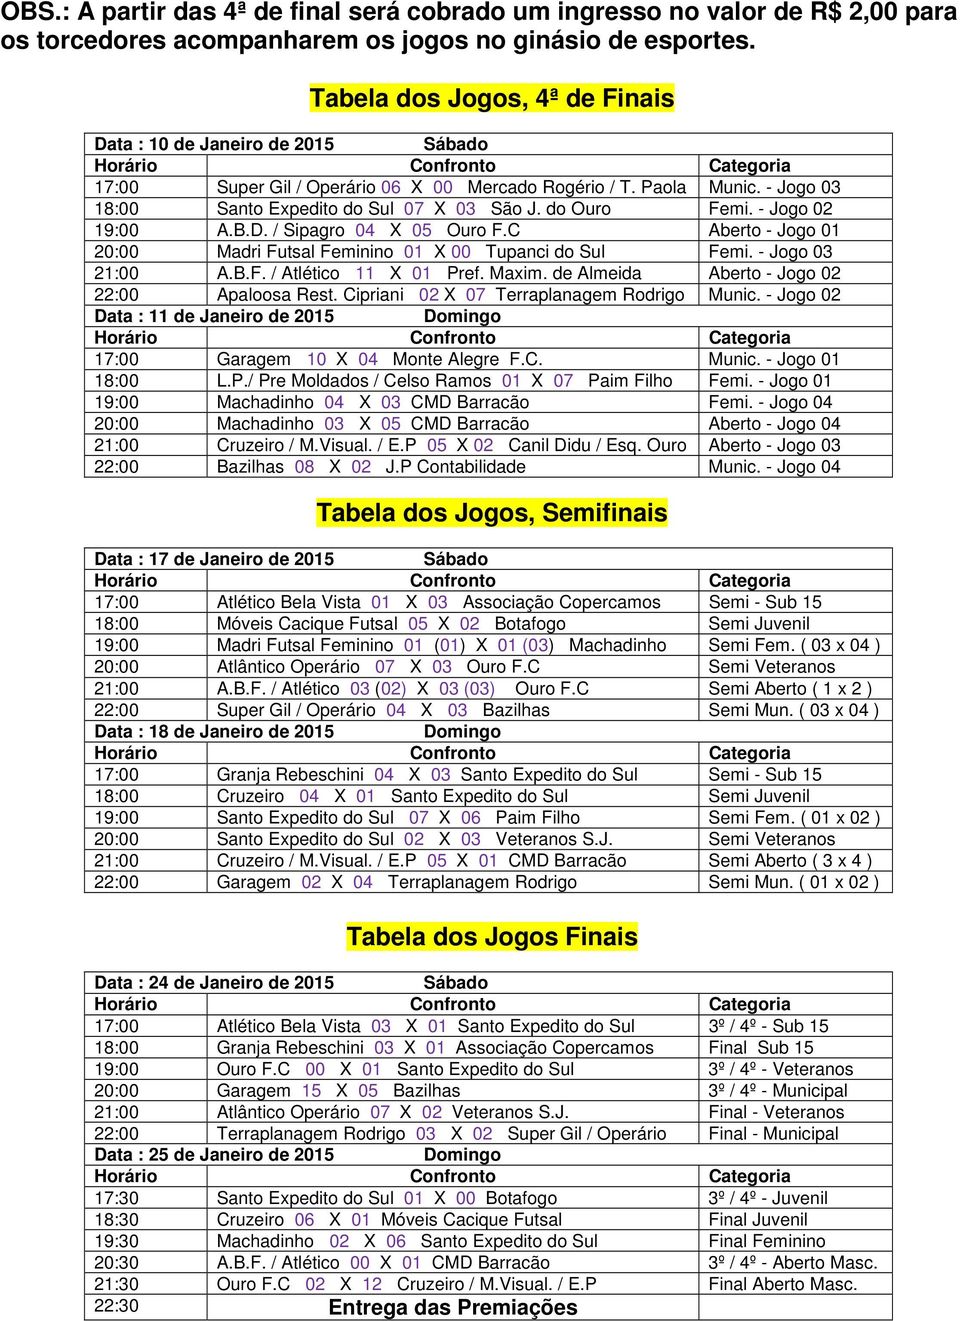 - Jogo 02 19:00 A.B.D. / Sipagro 04 X 05 Ouro F.C Aberto - Jogo 01 20:00 Madri Futsal Feminino 01 X 00 Tupanci do Sul Femi. - Jogo 03 21:00 A.B.F. / Atlético 11 X 01 Pref. Maxim.